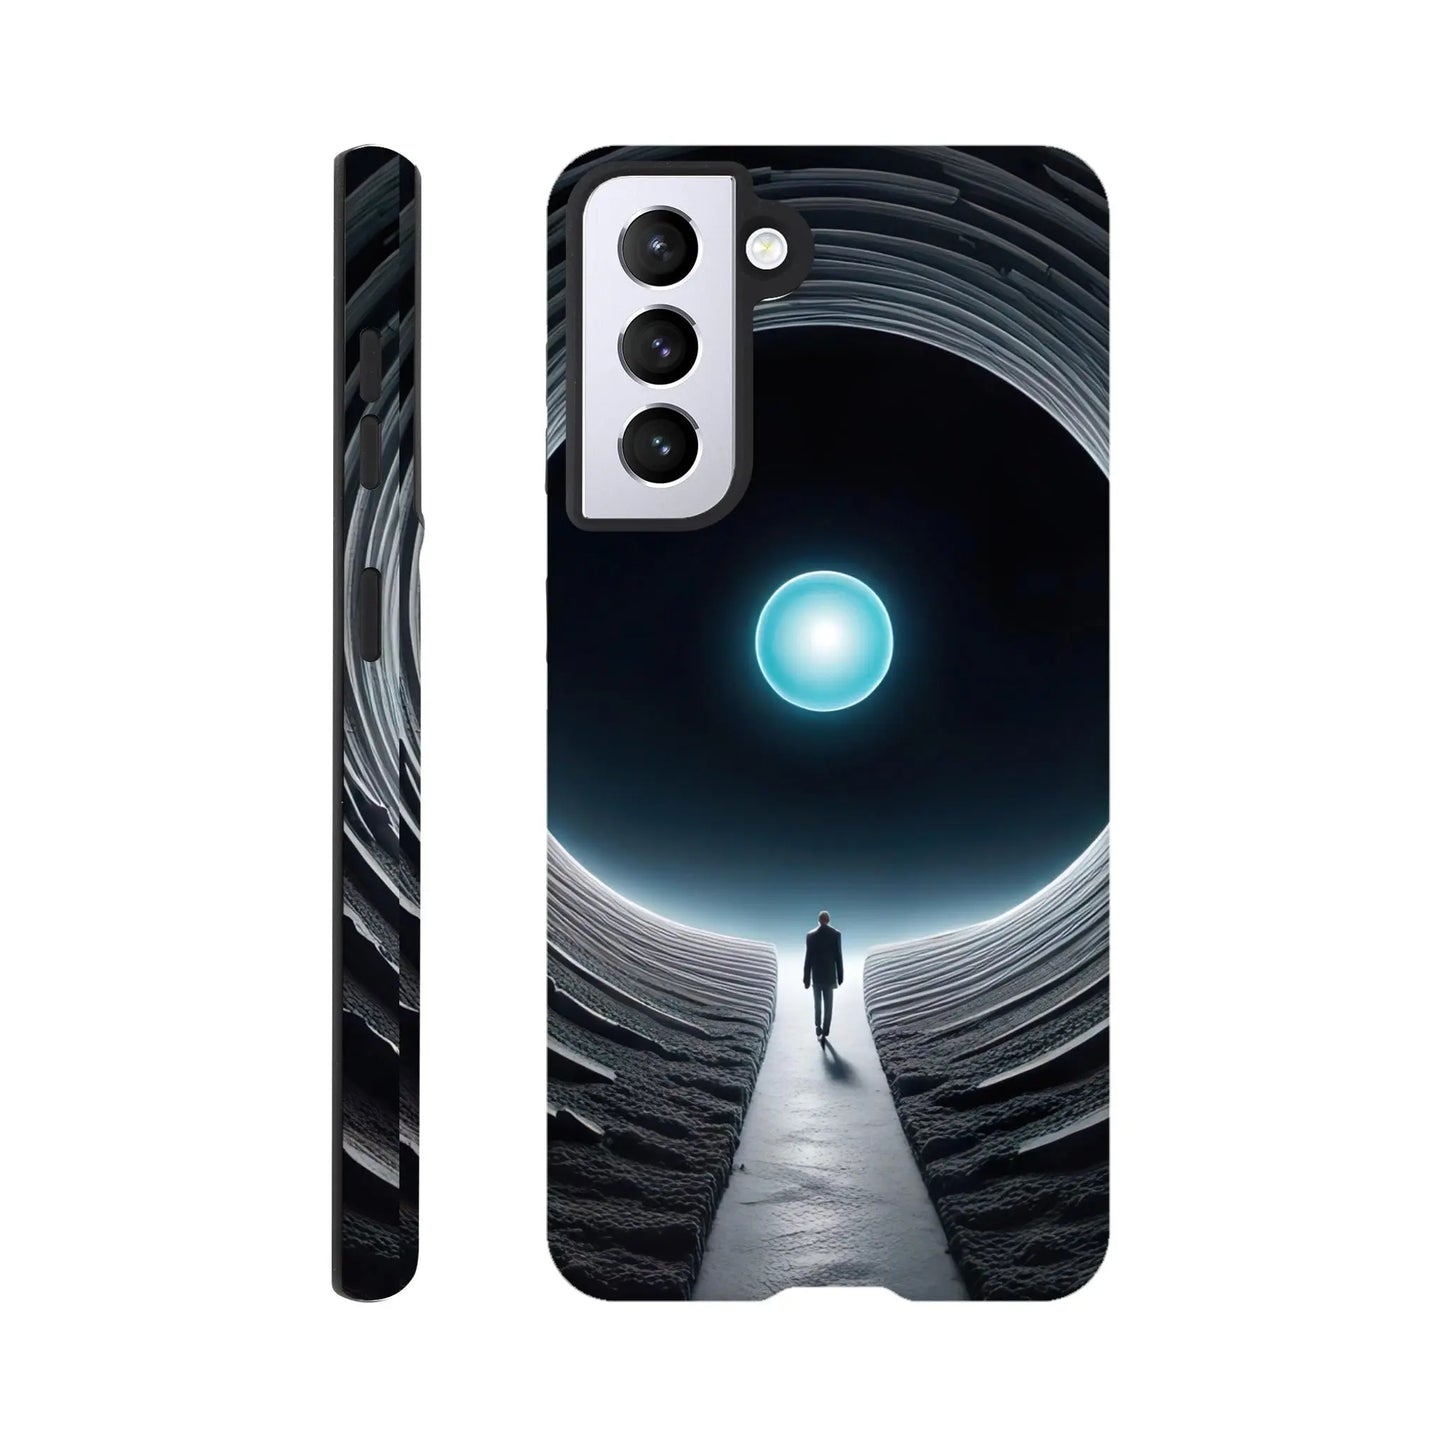 Smartphone-Hülle "Hart" - Weitblick - Digitaler Stil, KI-Kunst RolConArt, Sci-Fi, Galaxy-S21